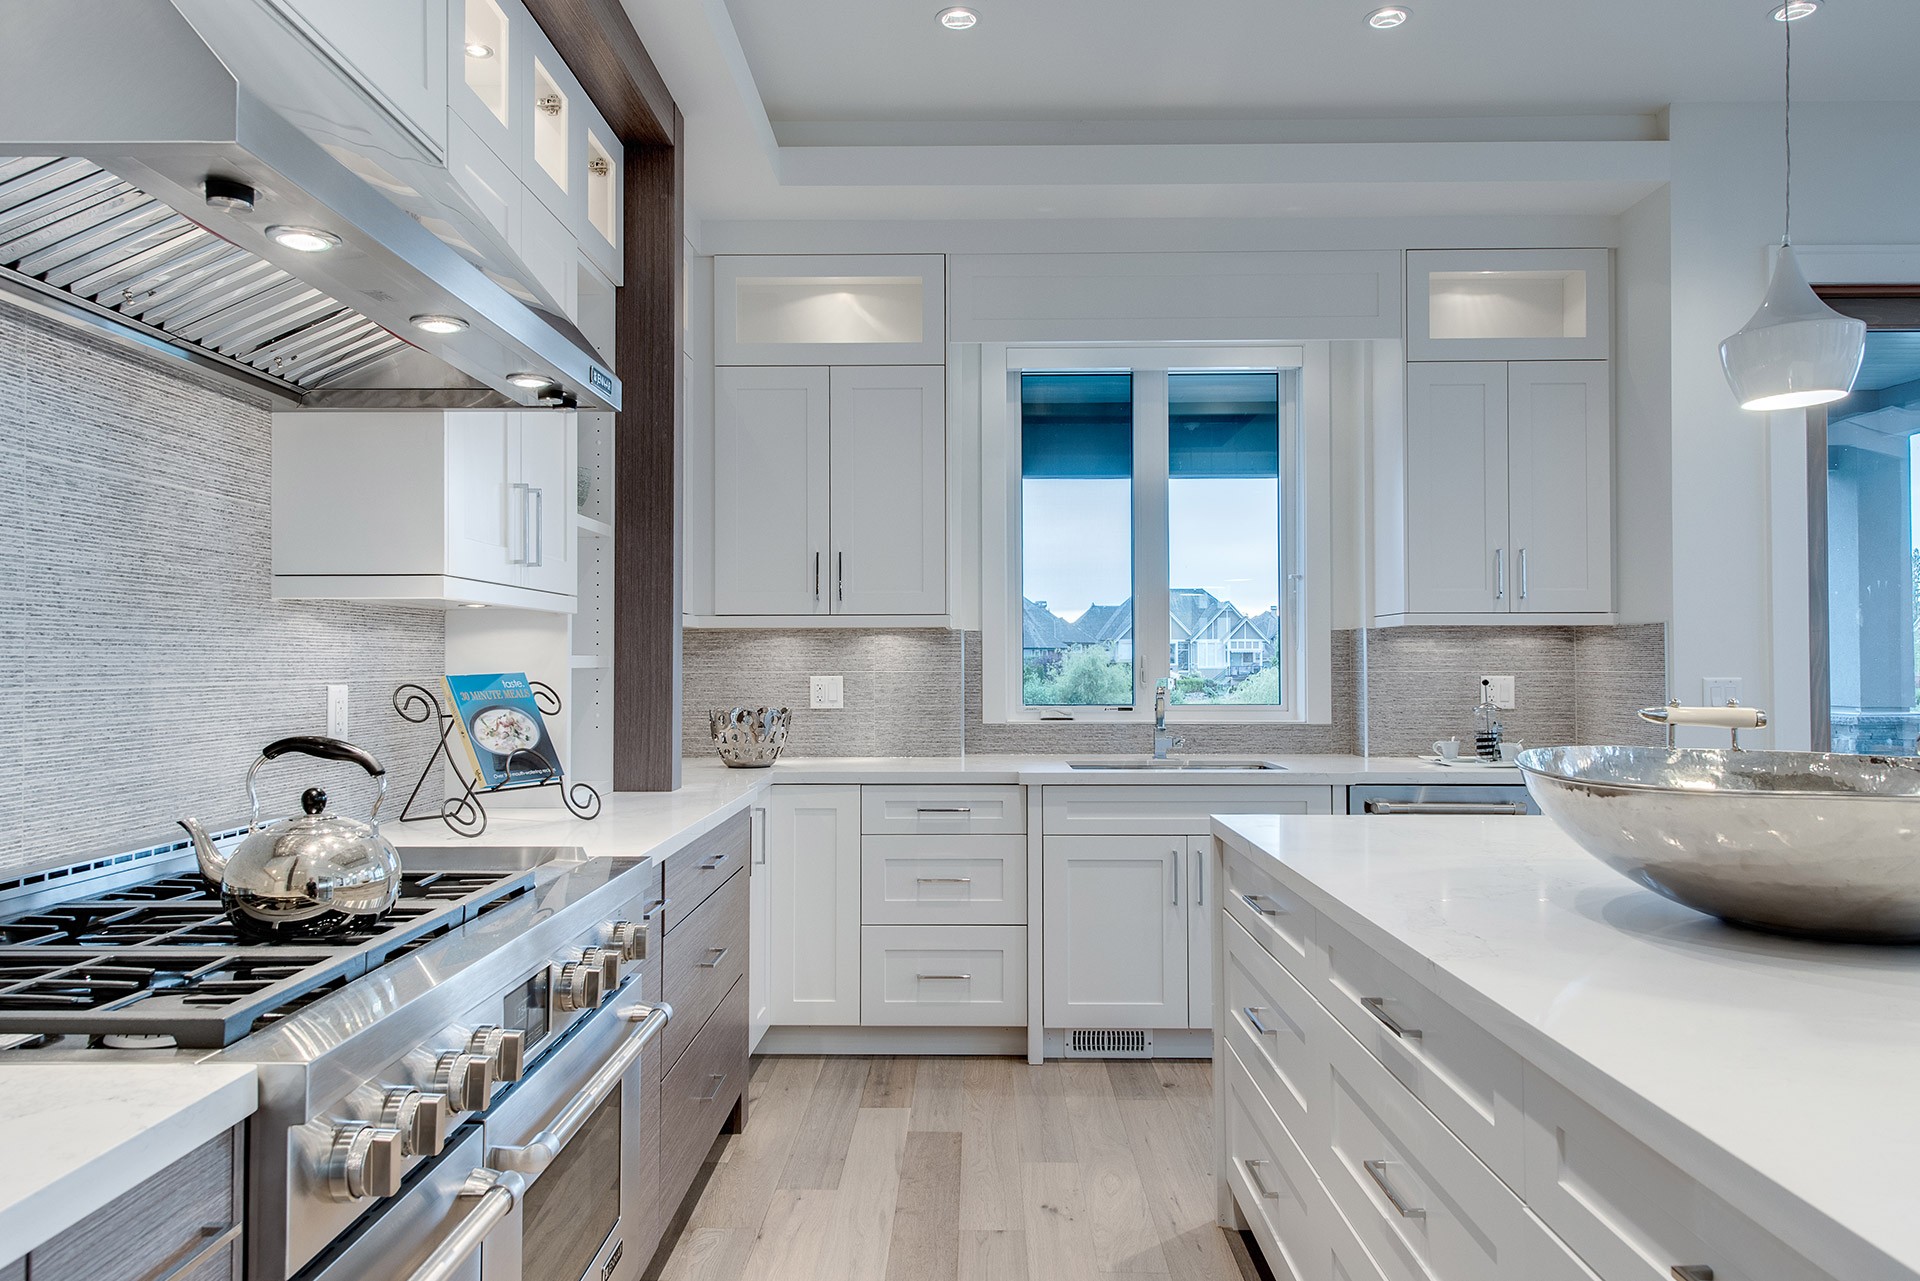 Sunrise Kitchens - Toronto - Specializing in multi-family kitchen cabinets